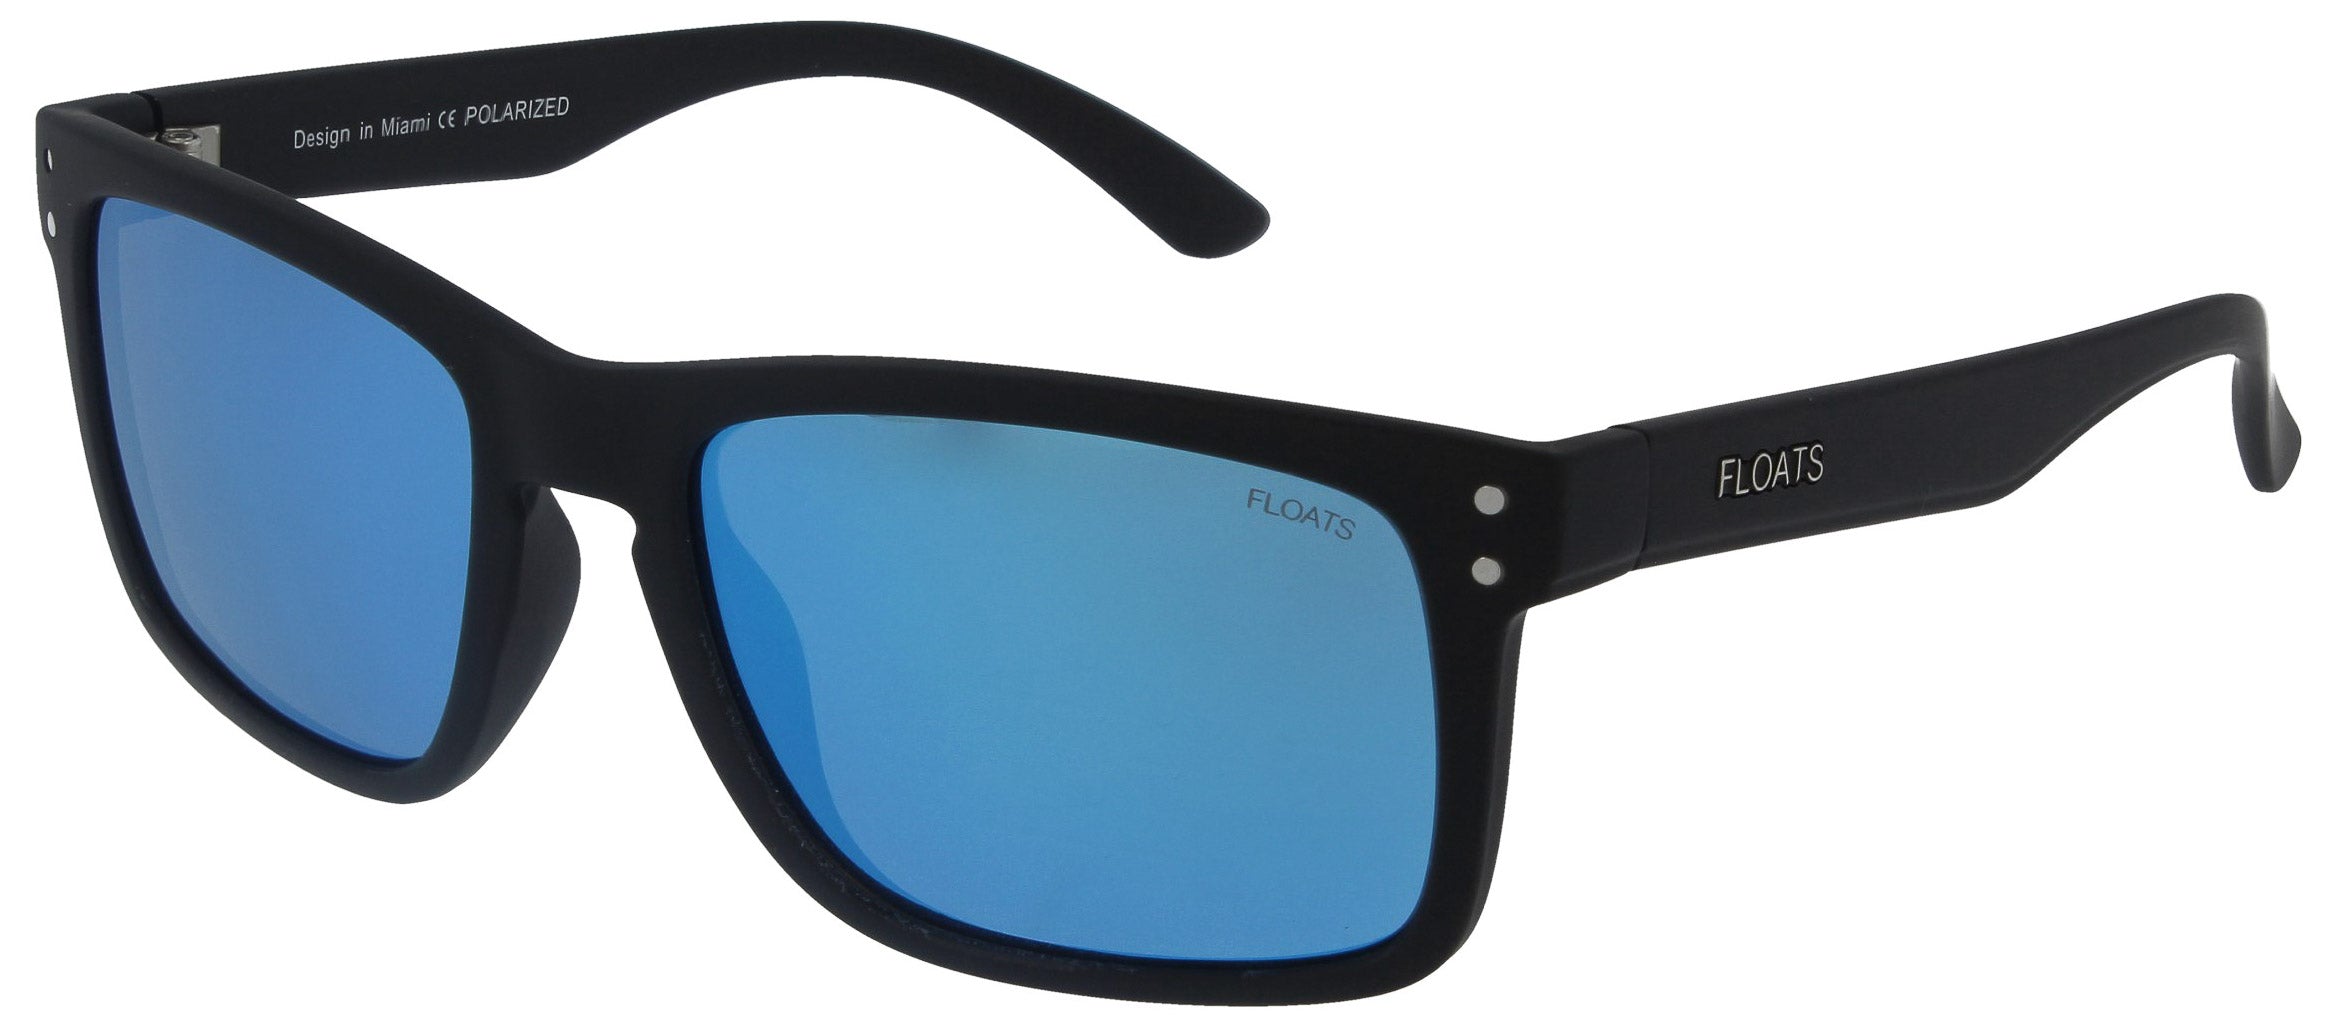 Oasis - Floating Sunglasses White / Black Gradient